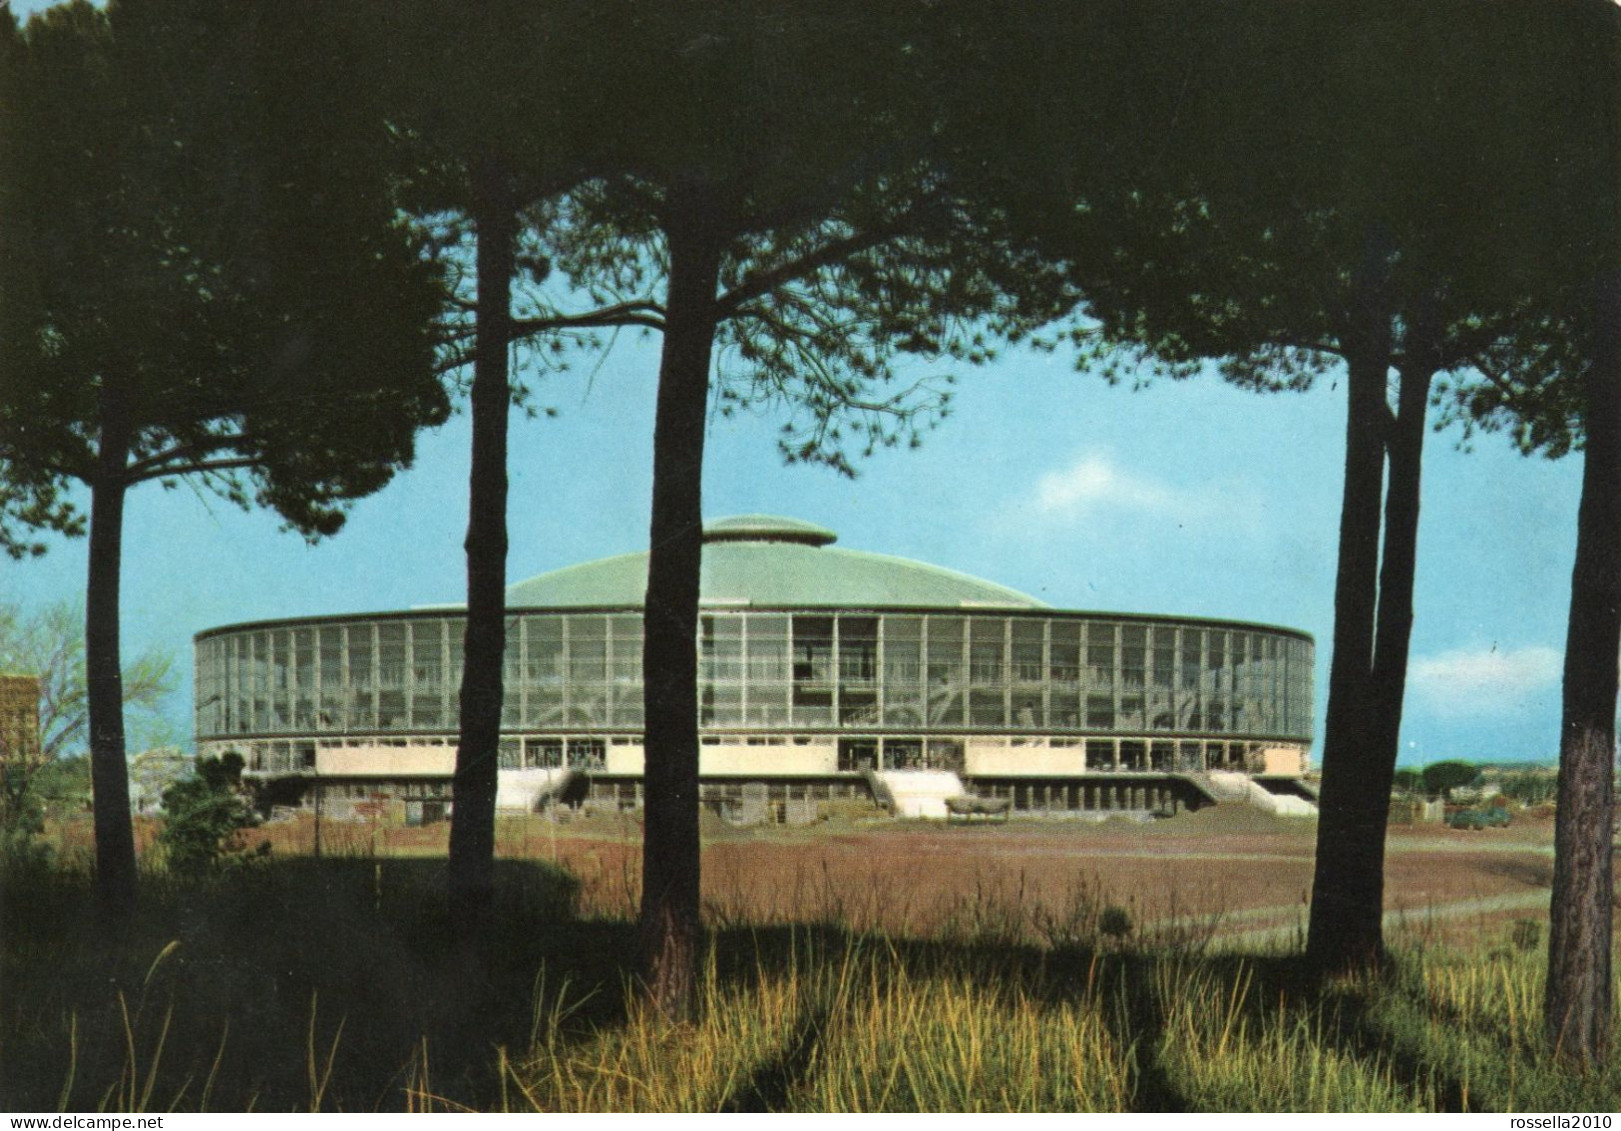 CARTOLINA  ITALIA 1966 ROMA EUR PALAZZO DELLO SPORT Italy Postcard ITALIEN Ansichtskarten - Estadios E Instalaciones Deportivas